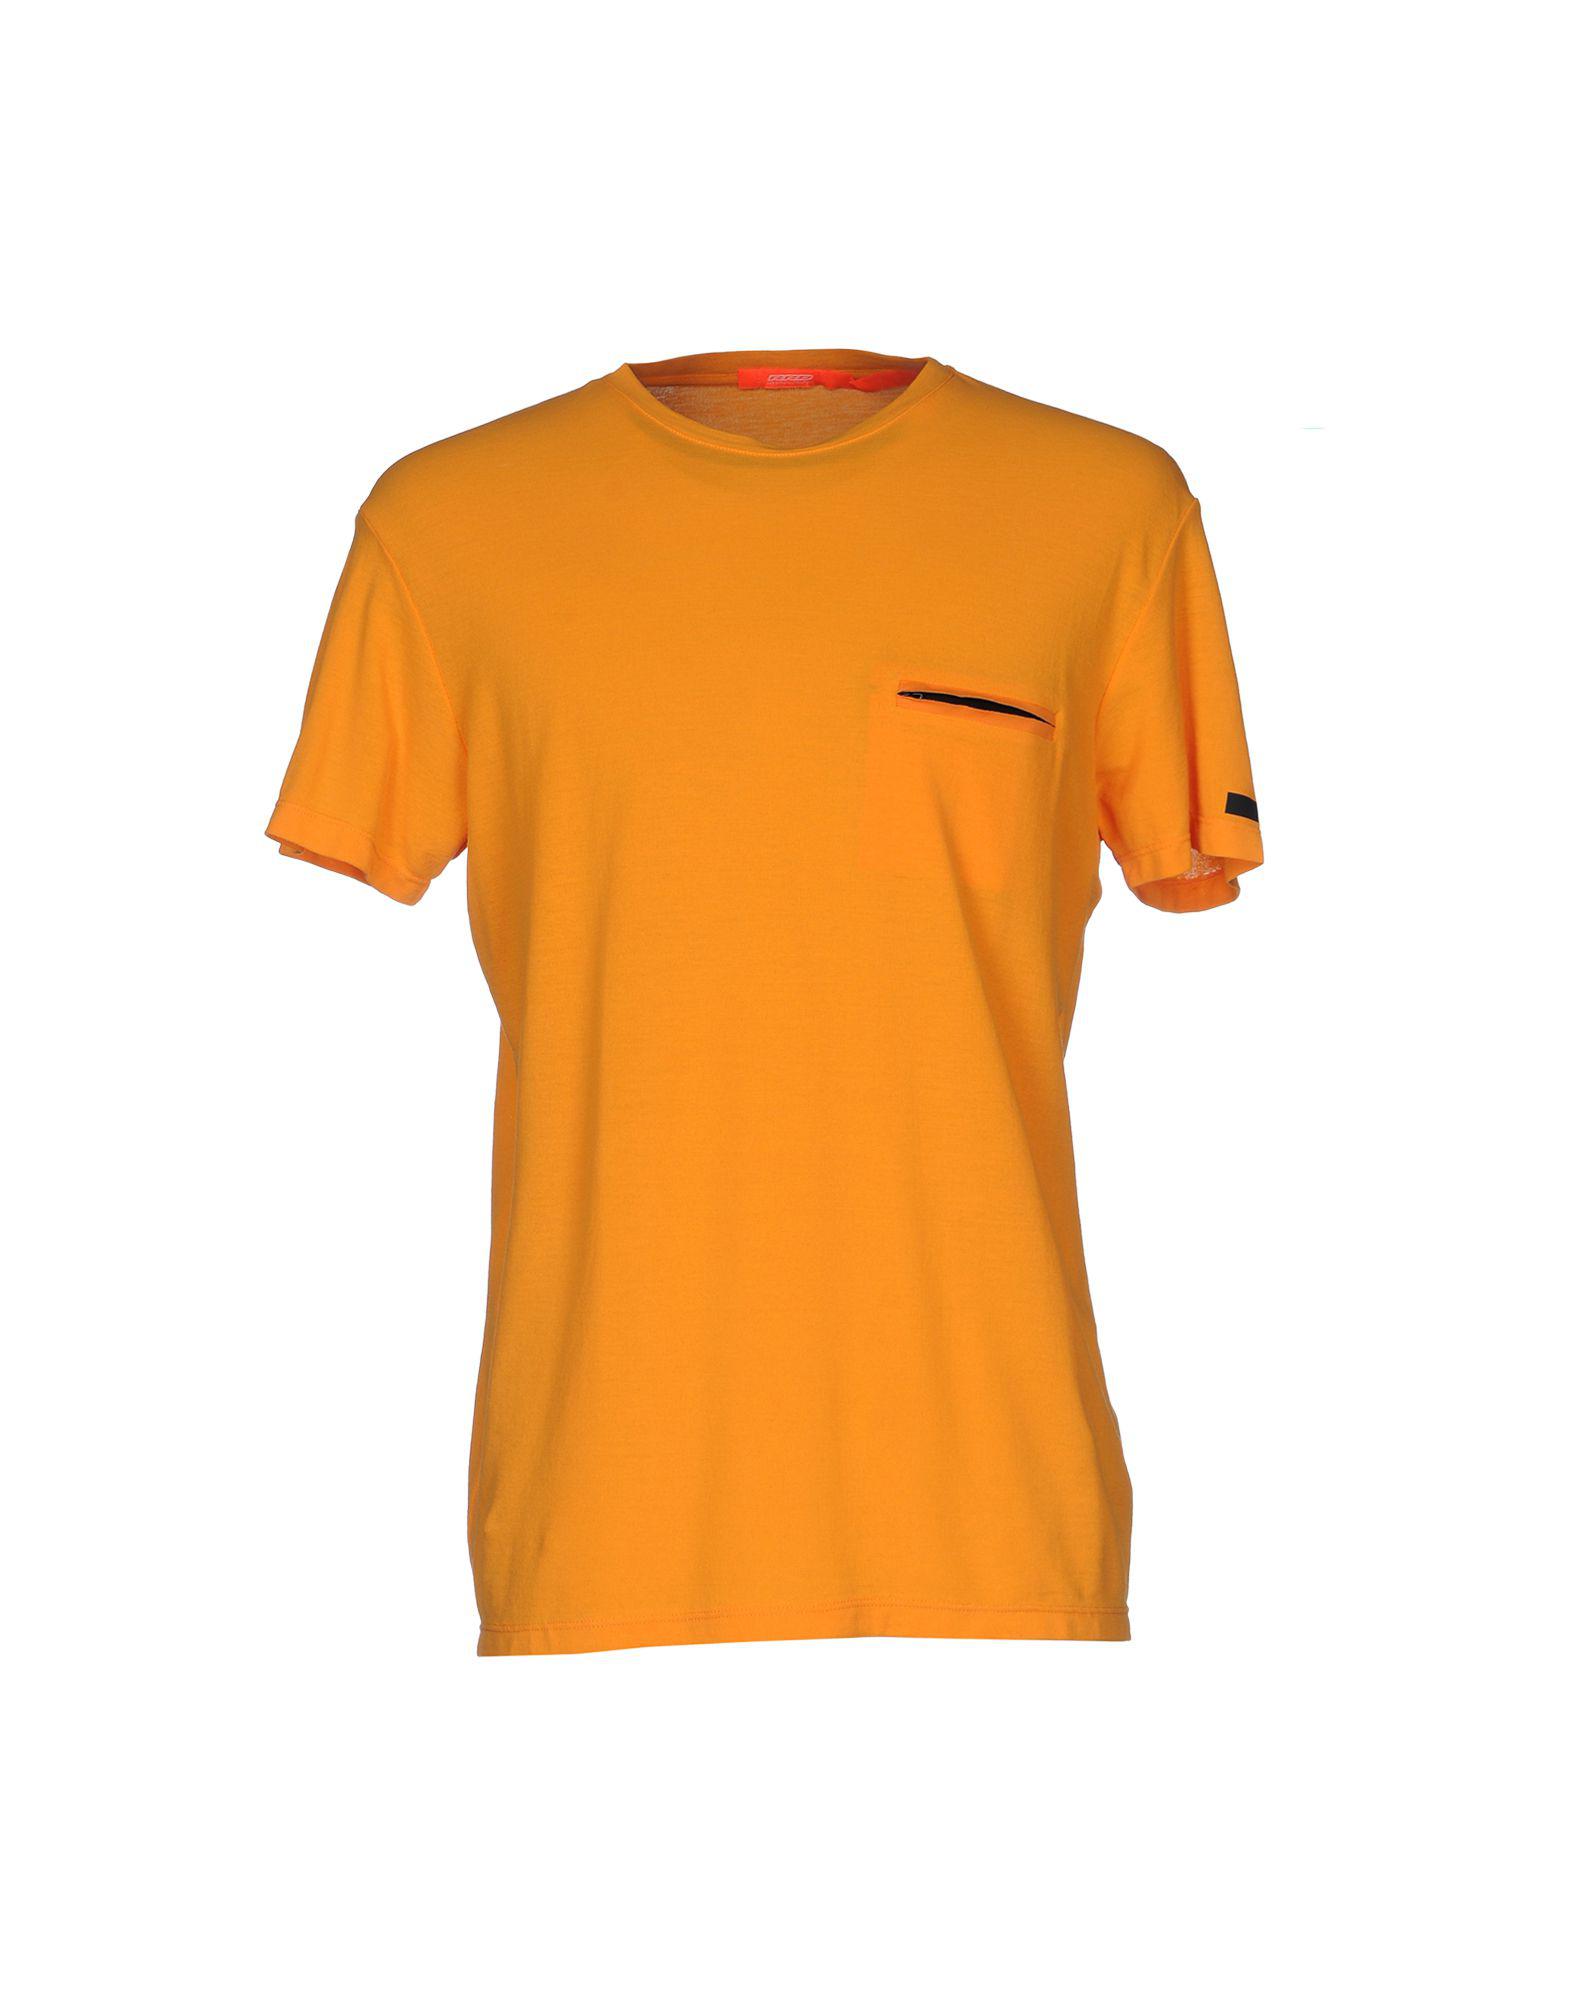 Rrd Cotton T-shirt in Orange for Men - Lyst